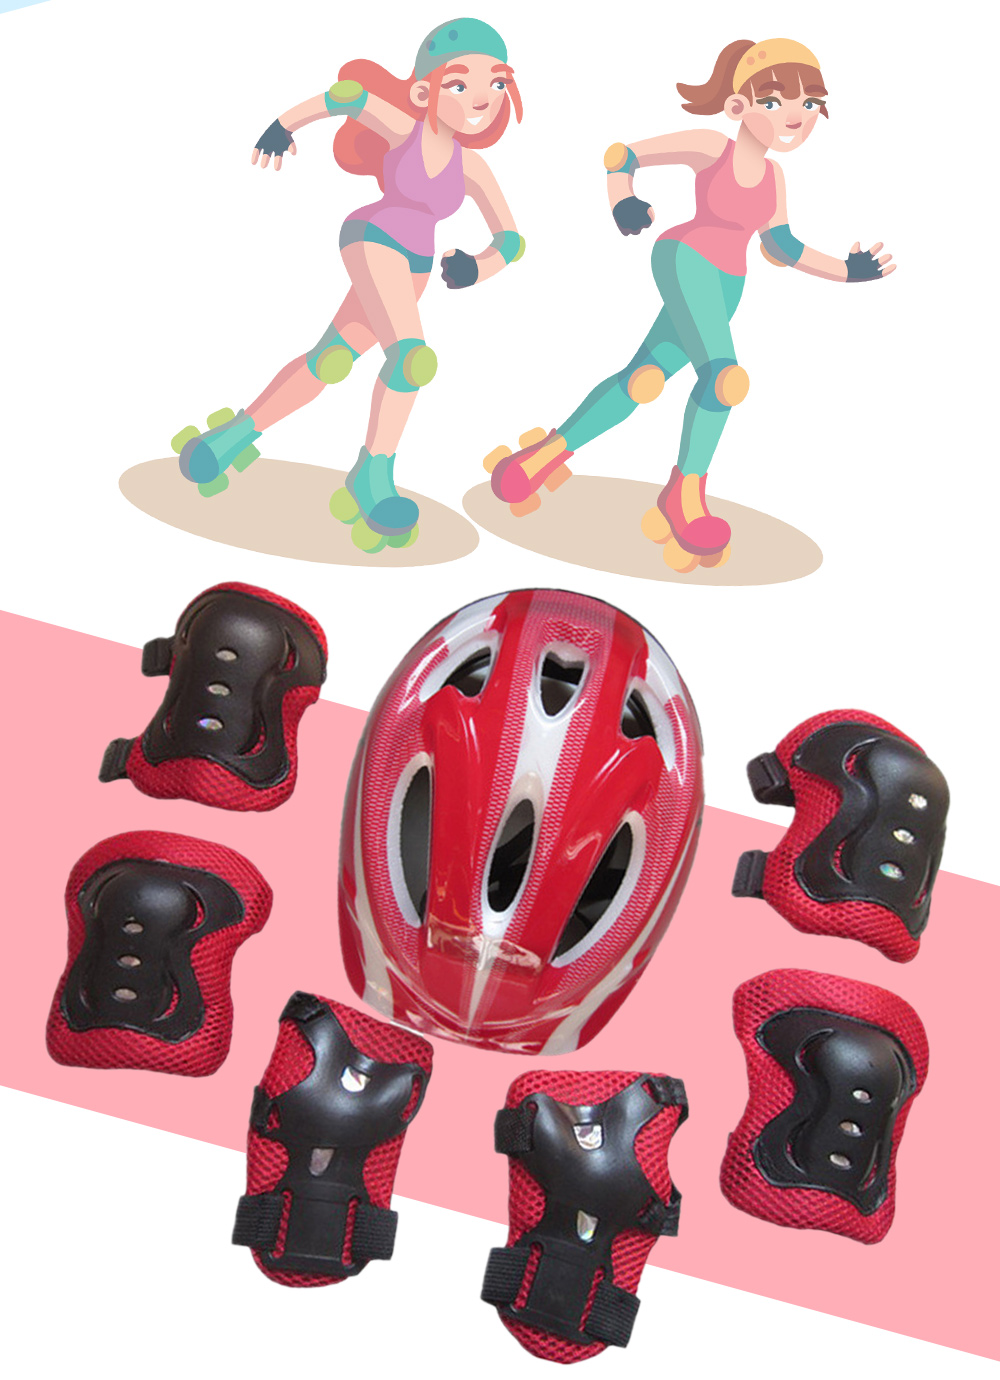 Kids Sports Safety Protective Gear for Skateboard Balance Car Roller Skating